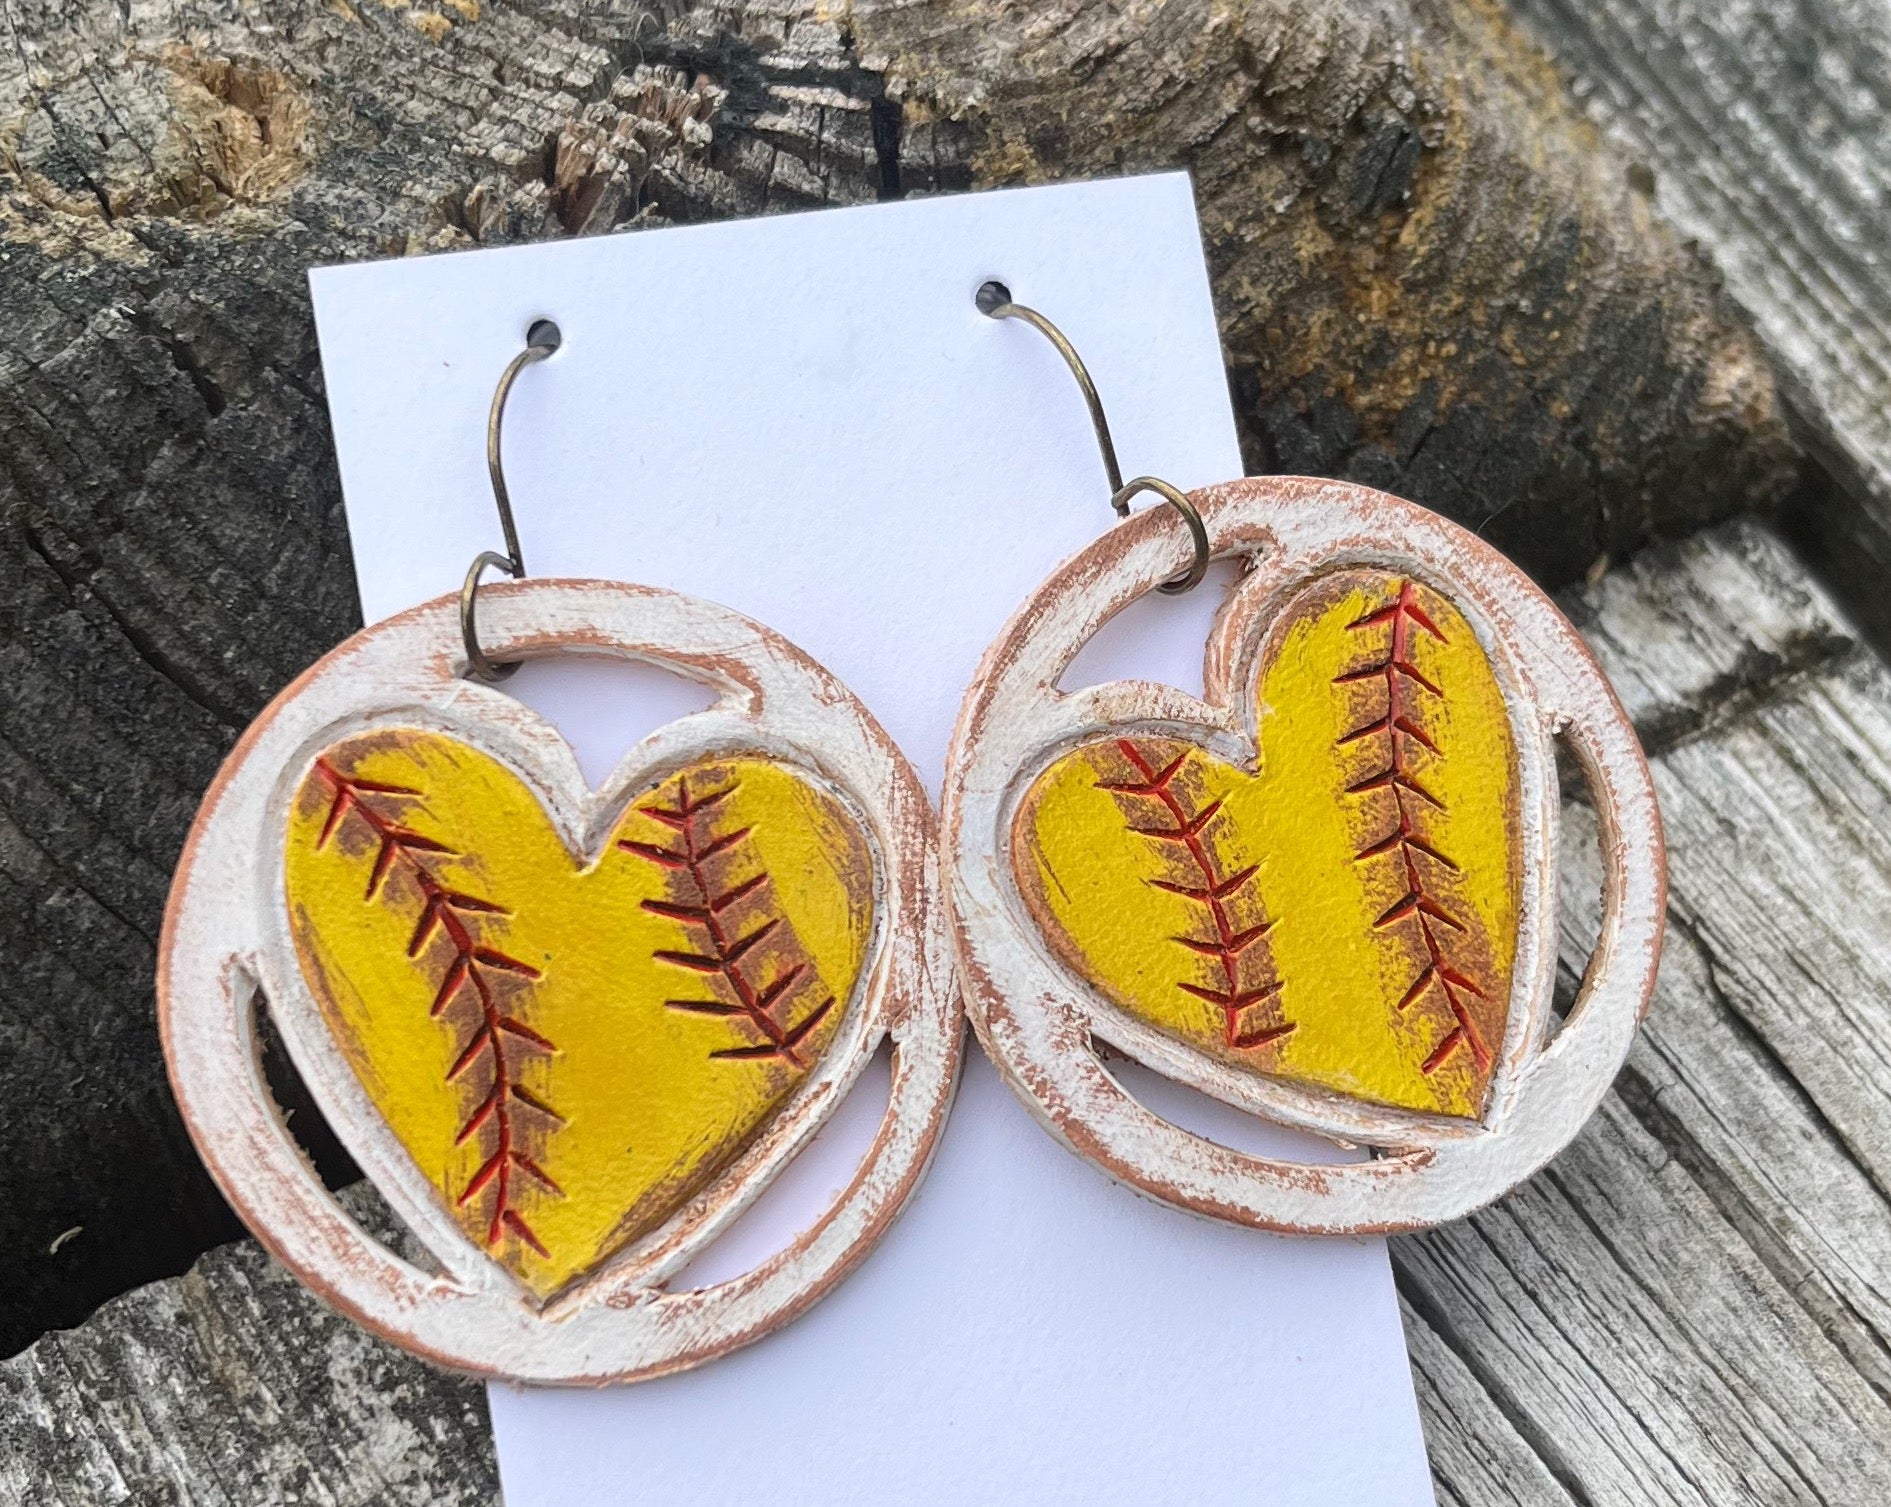 Tooled Leather Earrings - Softball circled heart